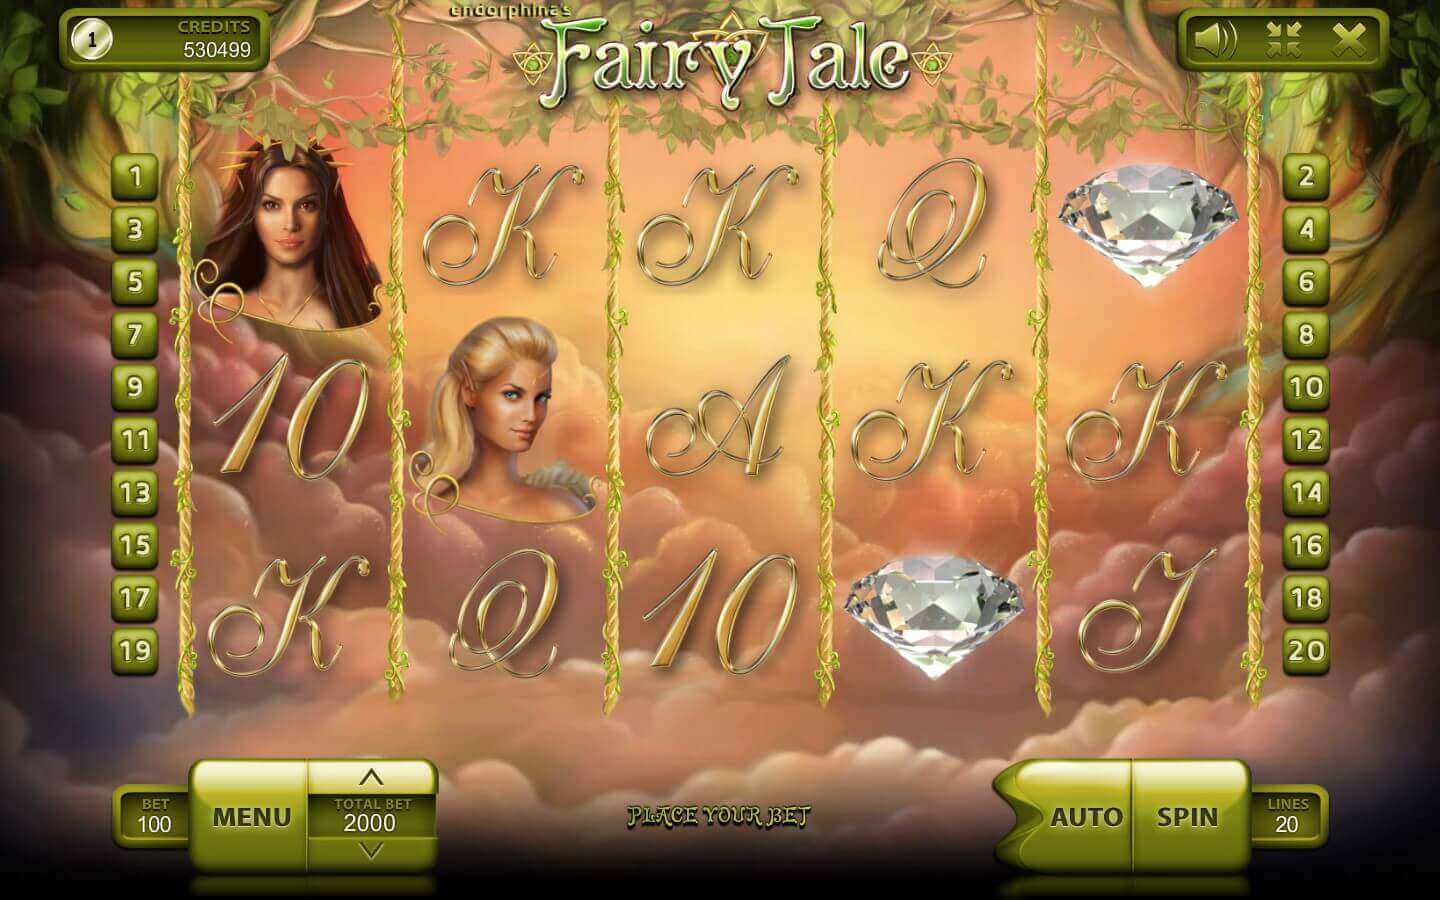 Fairy Tale Spel proces